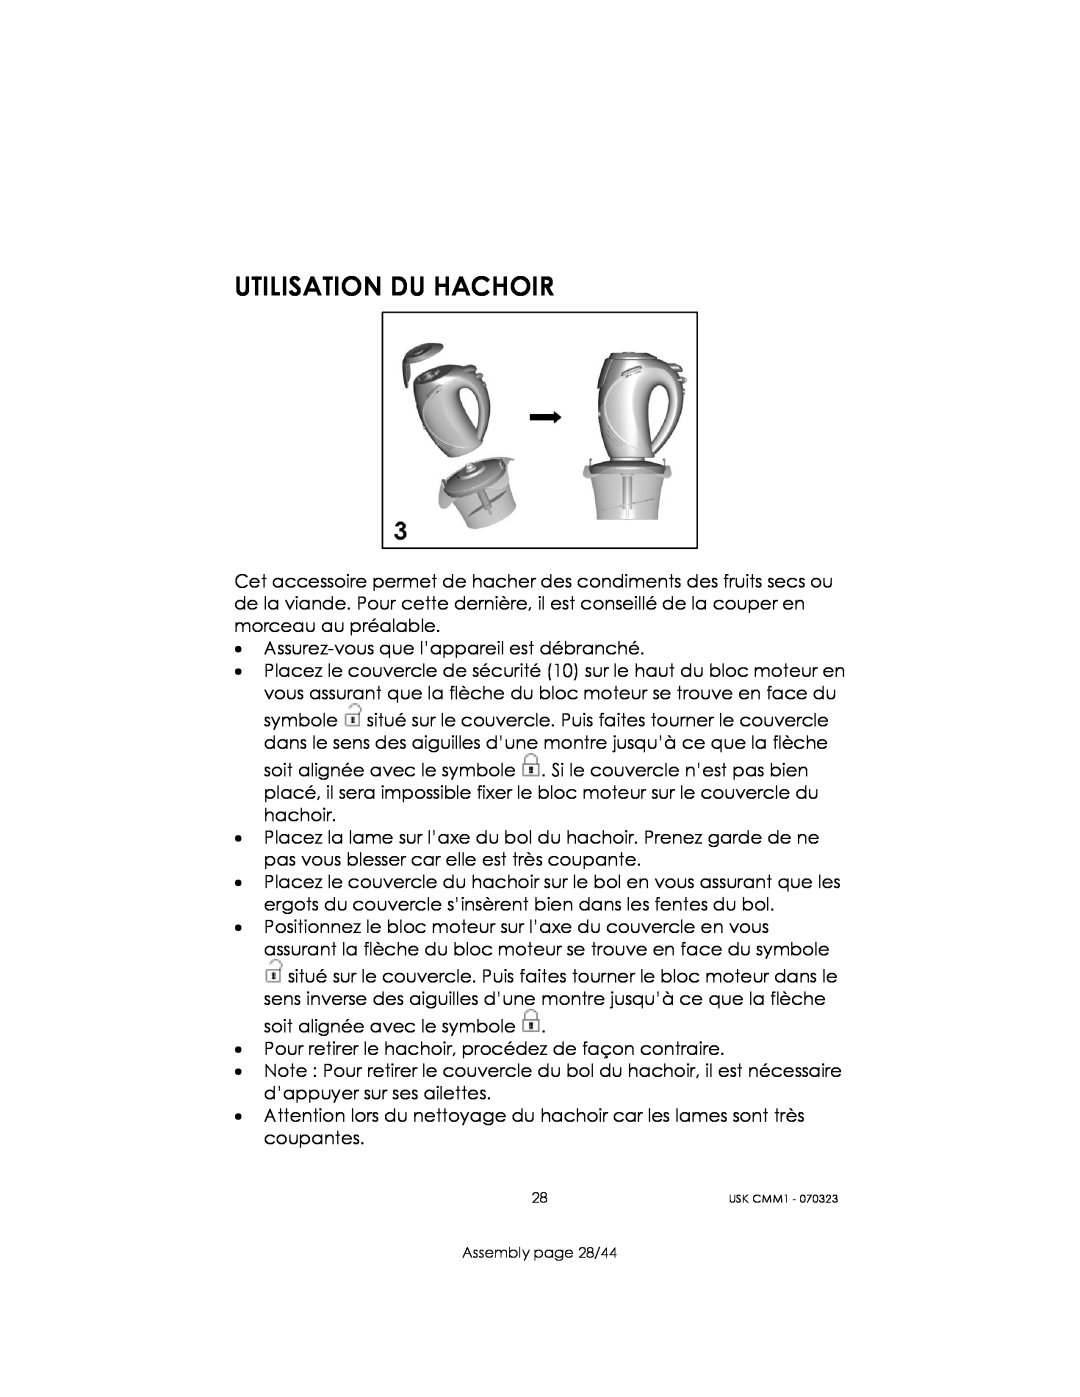 Kalorik USK CMM 1 manual Utilisation Du Hachoir, Assembly page 28/44 